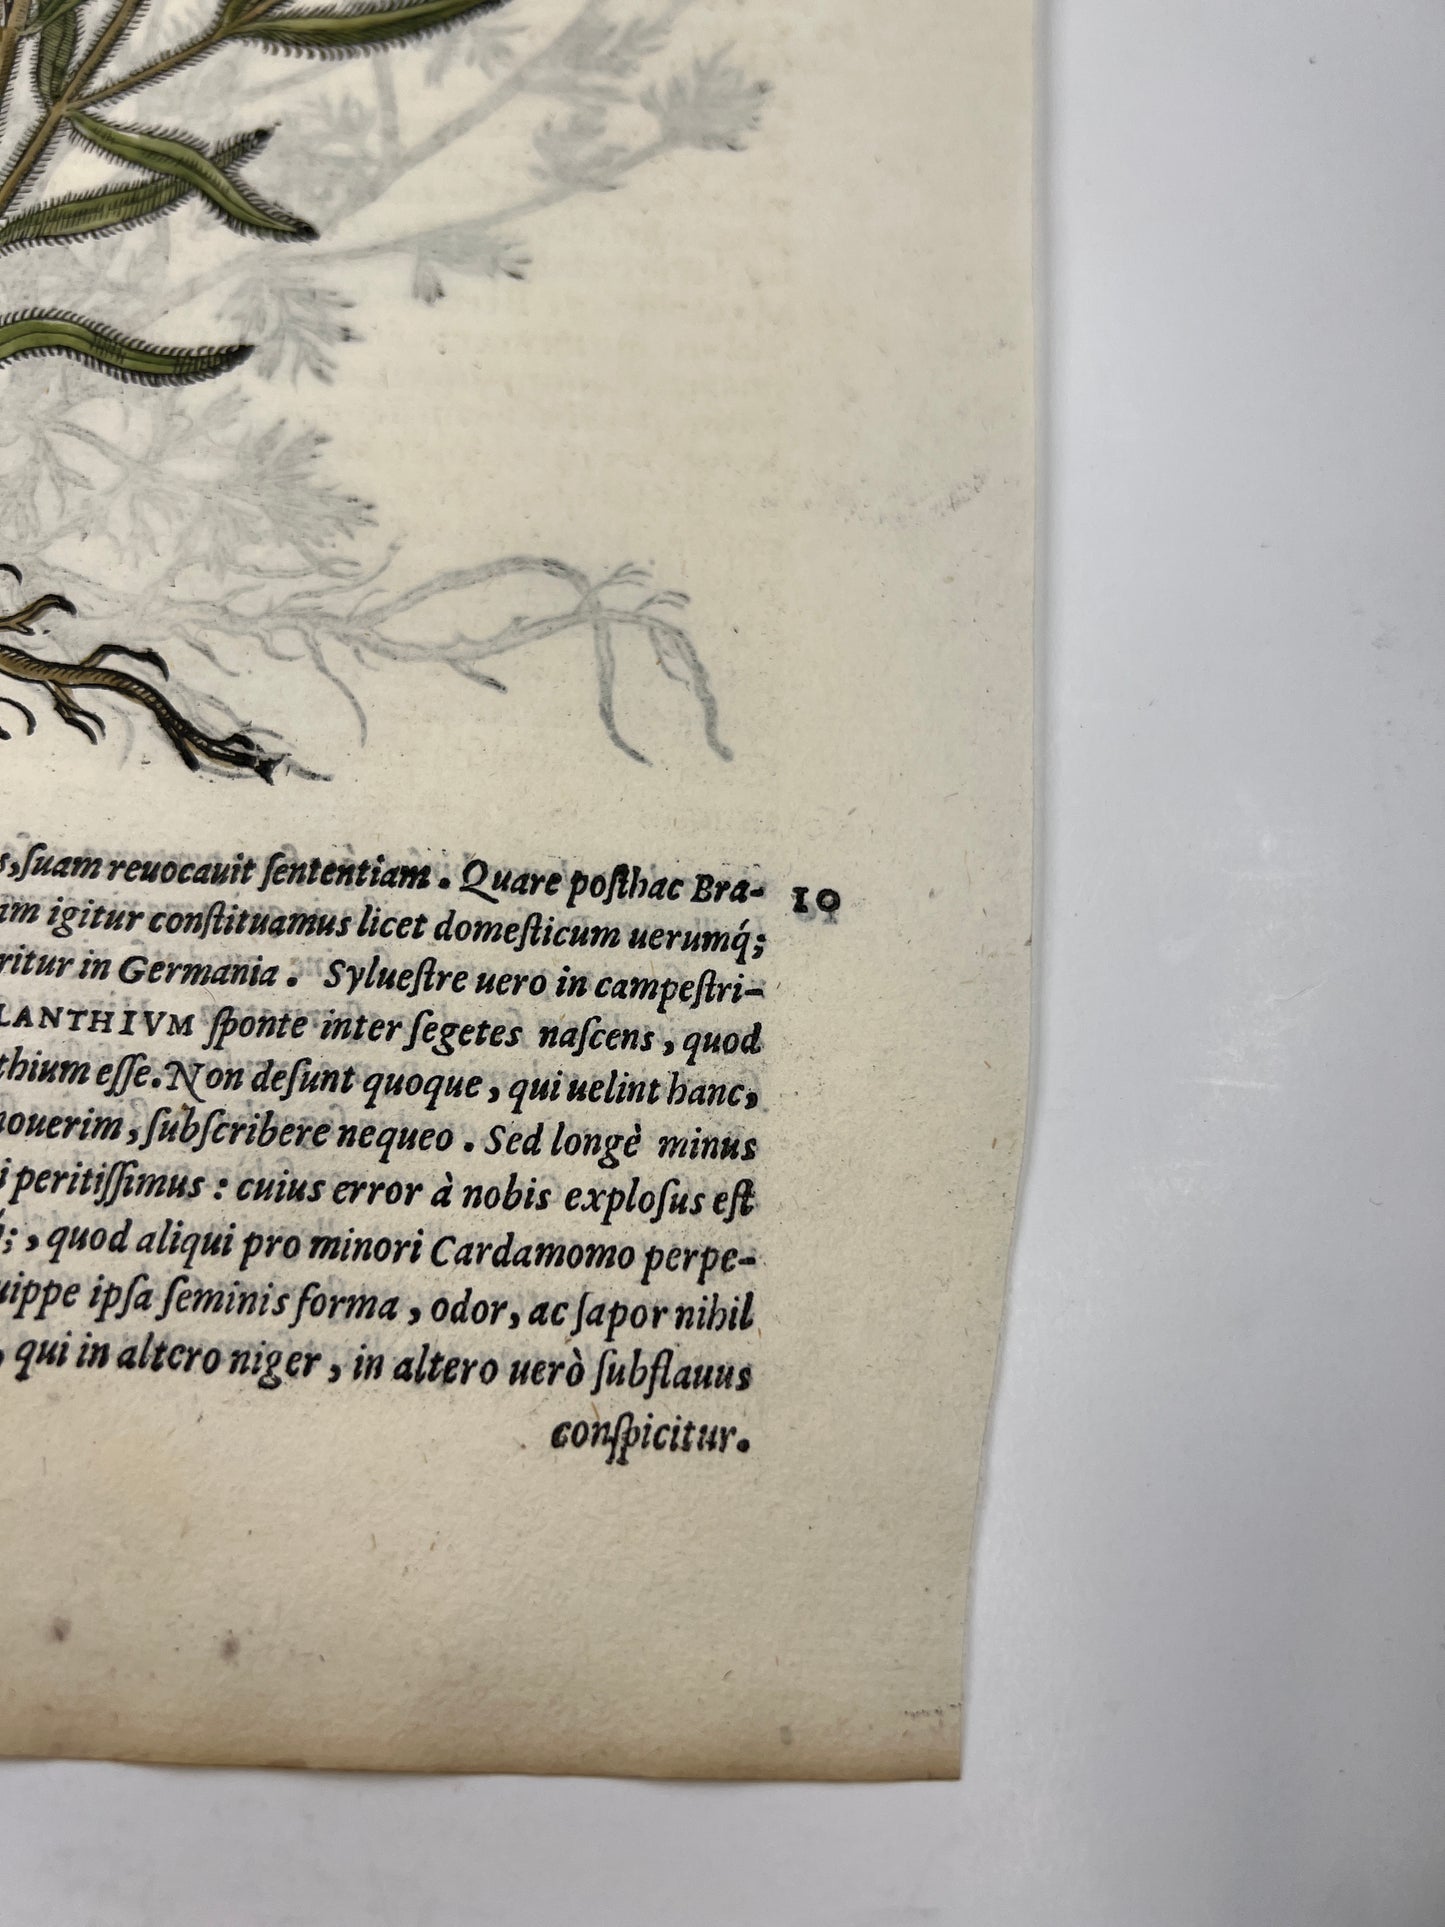 1565 Folio Leaf with 2 Large Hand Colored Woodcuts - Melanthium